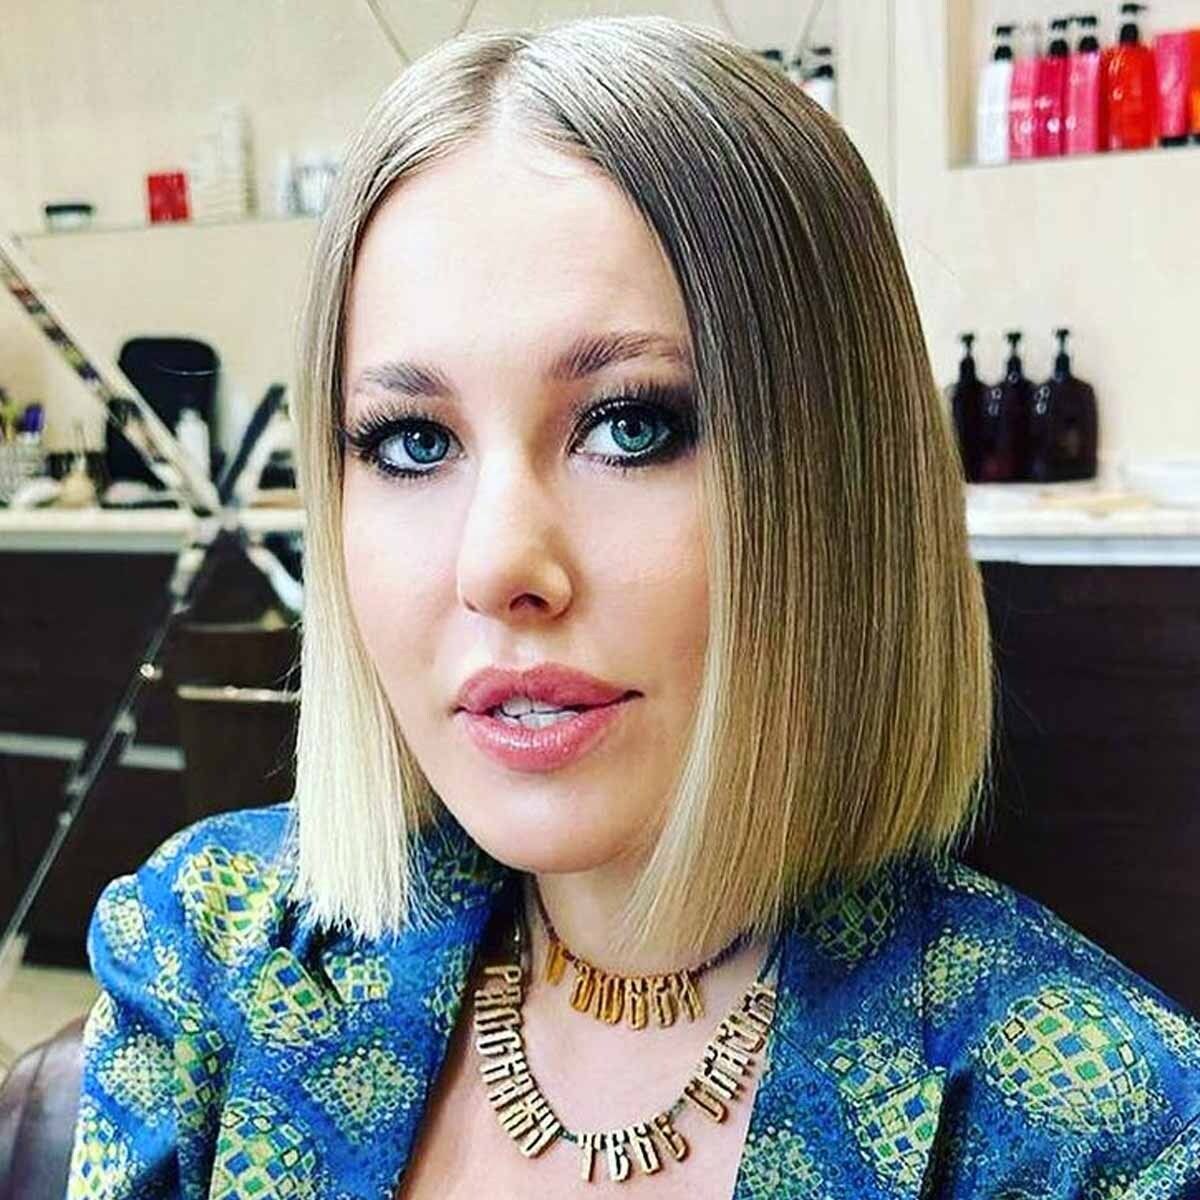 Ксения Собчак взяла интервью у экс-бойфренда - Вокруг ТВ.